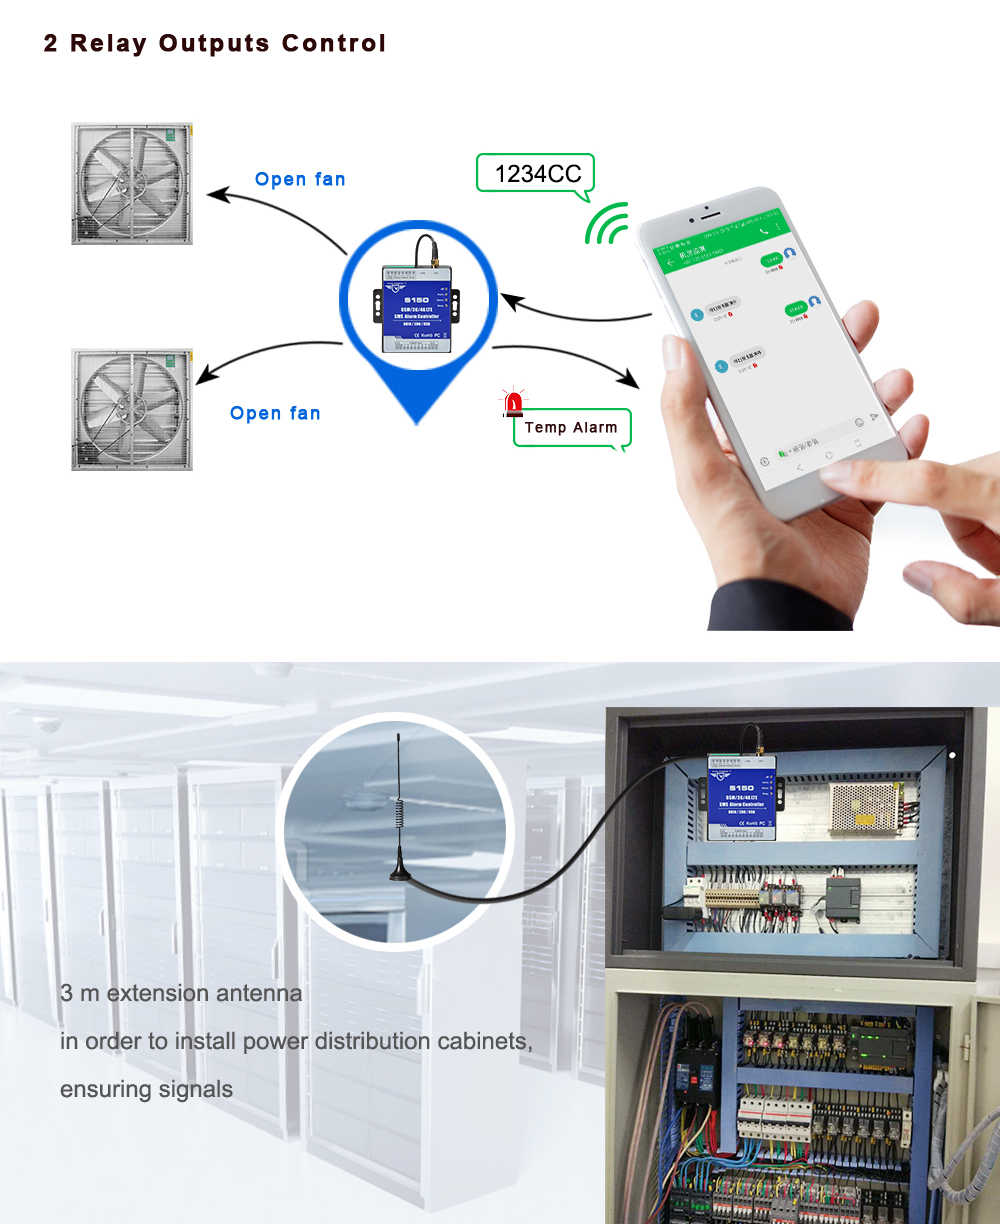 S150-GSM-2G-3G-Cellular-RTU-SMS-Alarm-Controller-Industrial-IOT-Monitoring-System-1396342